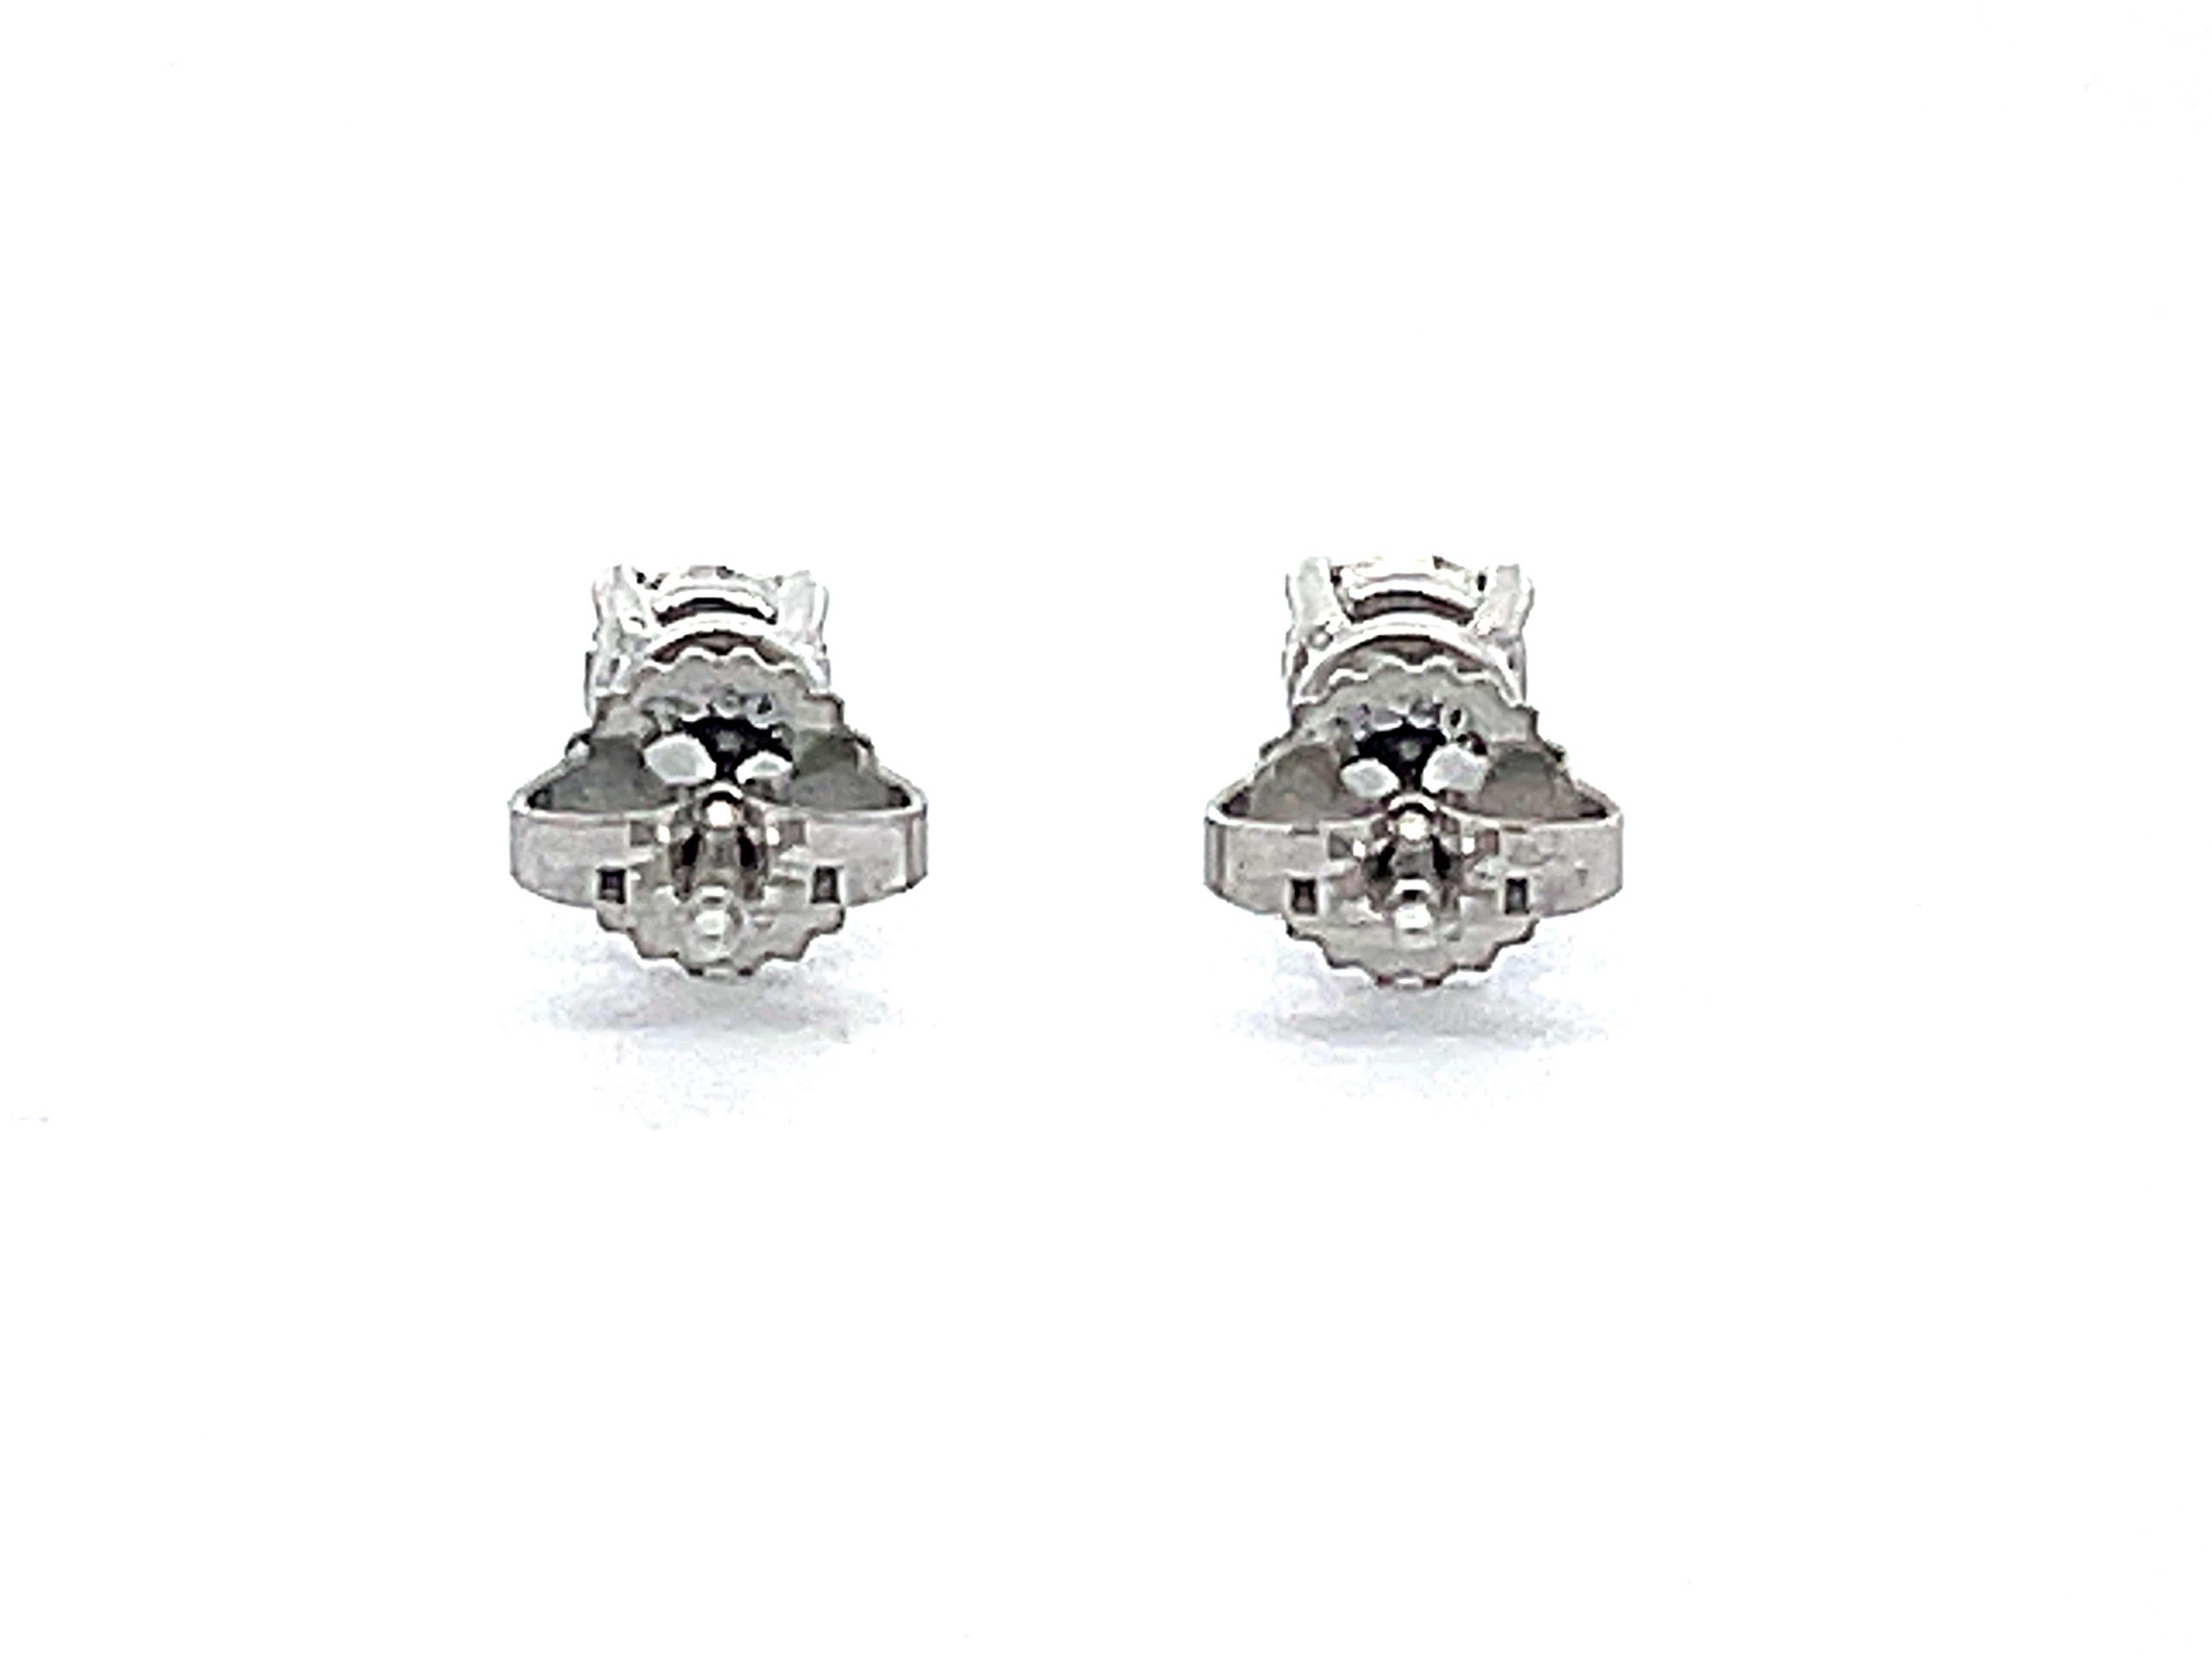 Tiffany Solitaire Diamond Stud Earrings in Platinum 0.58 ct 2